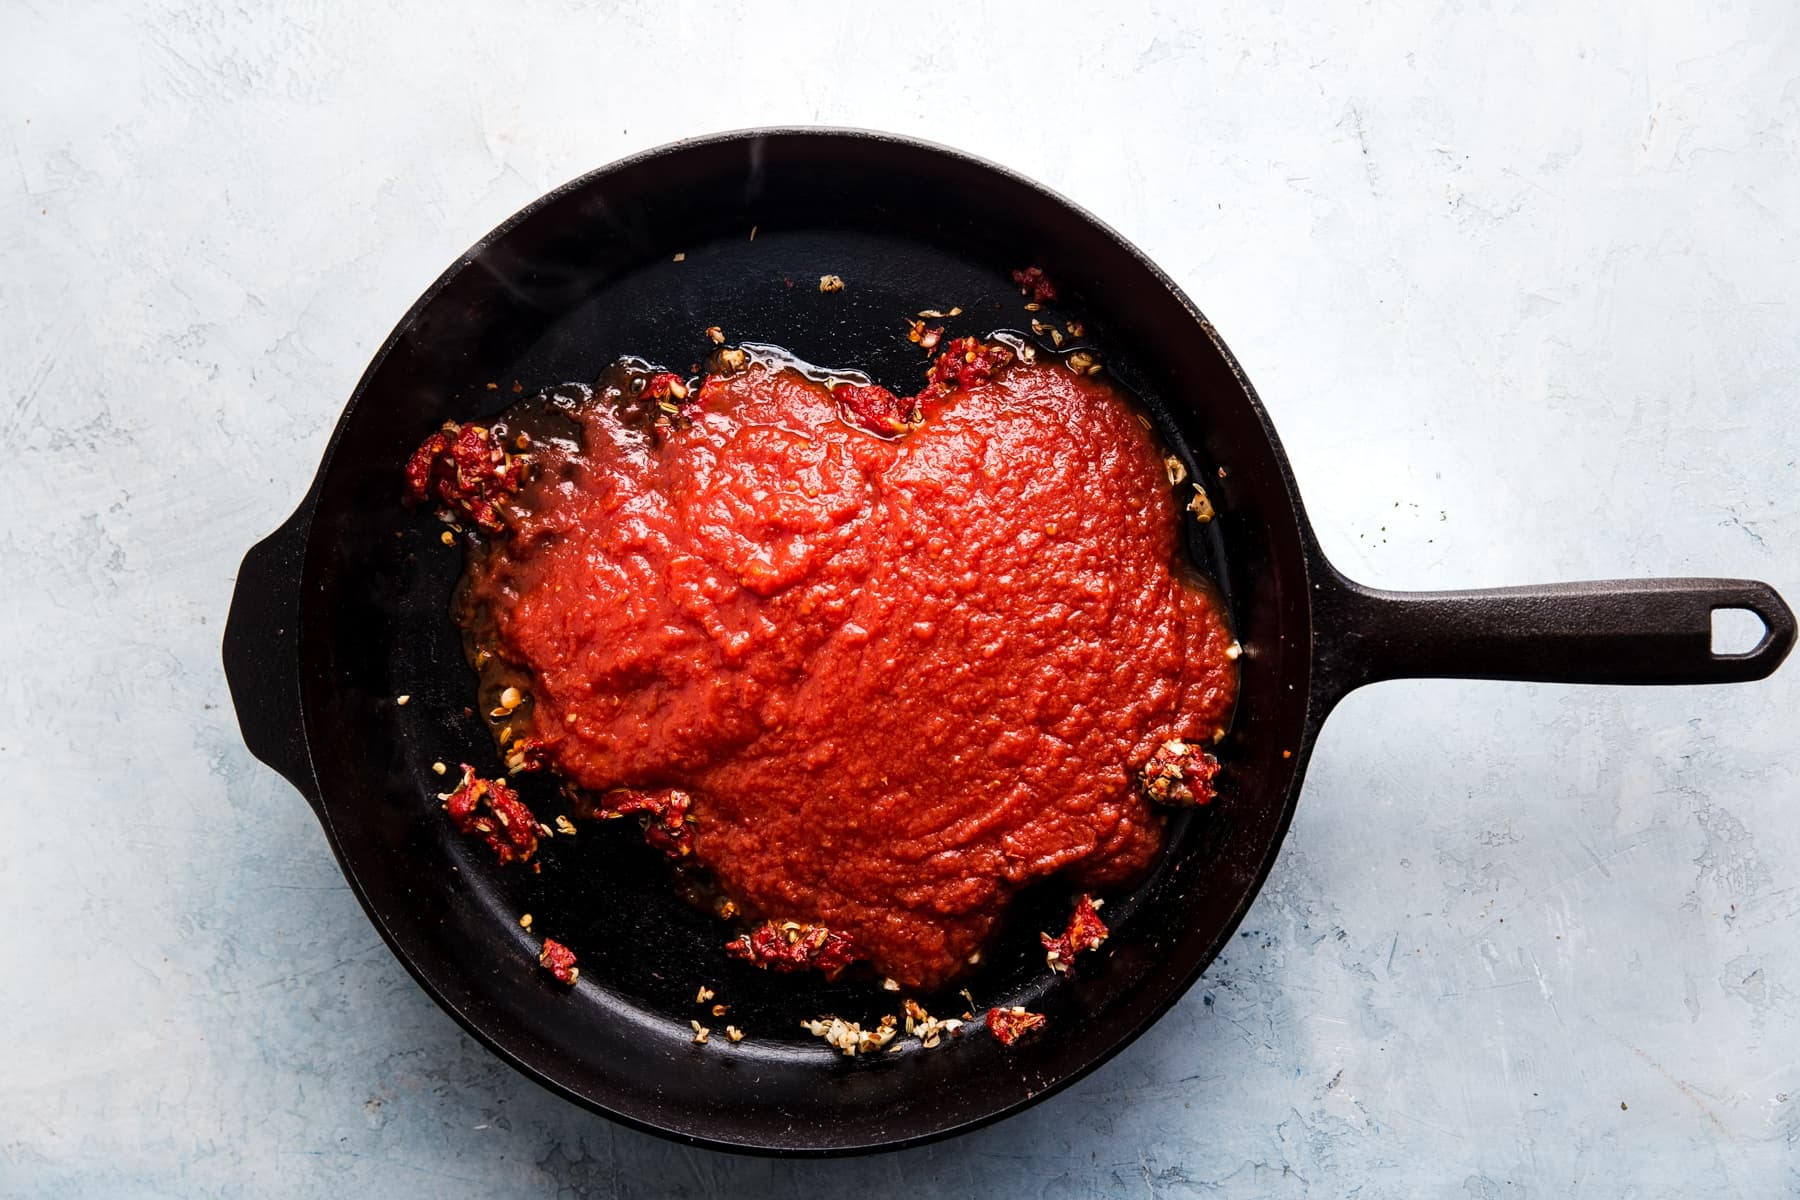 garlic, tomato paste and tomato sauce in a cast iron skillet